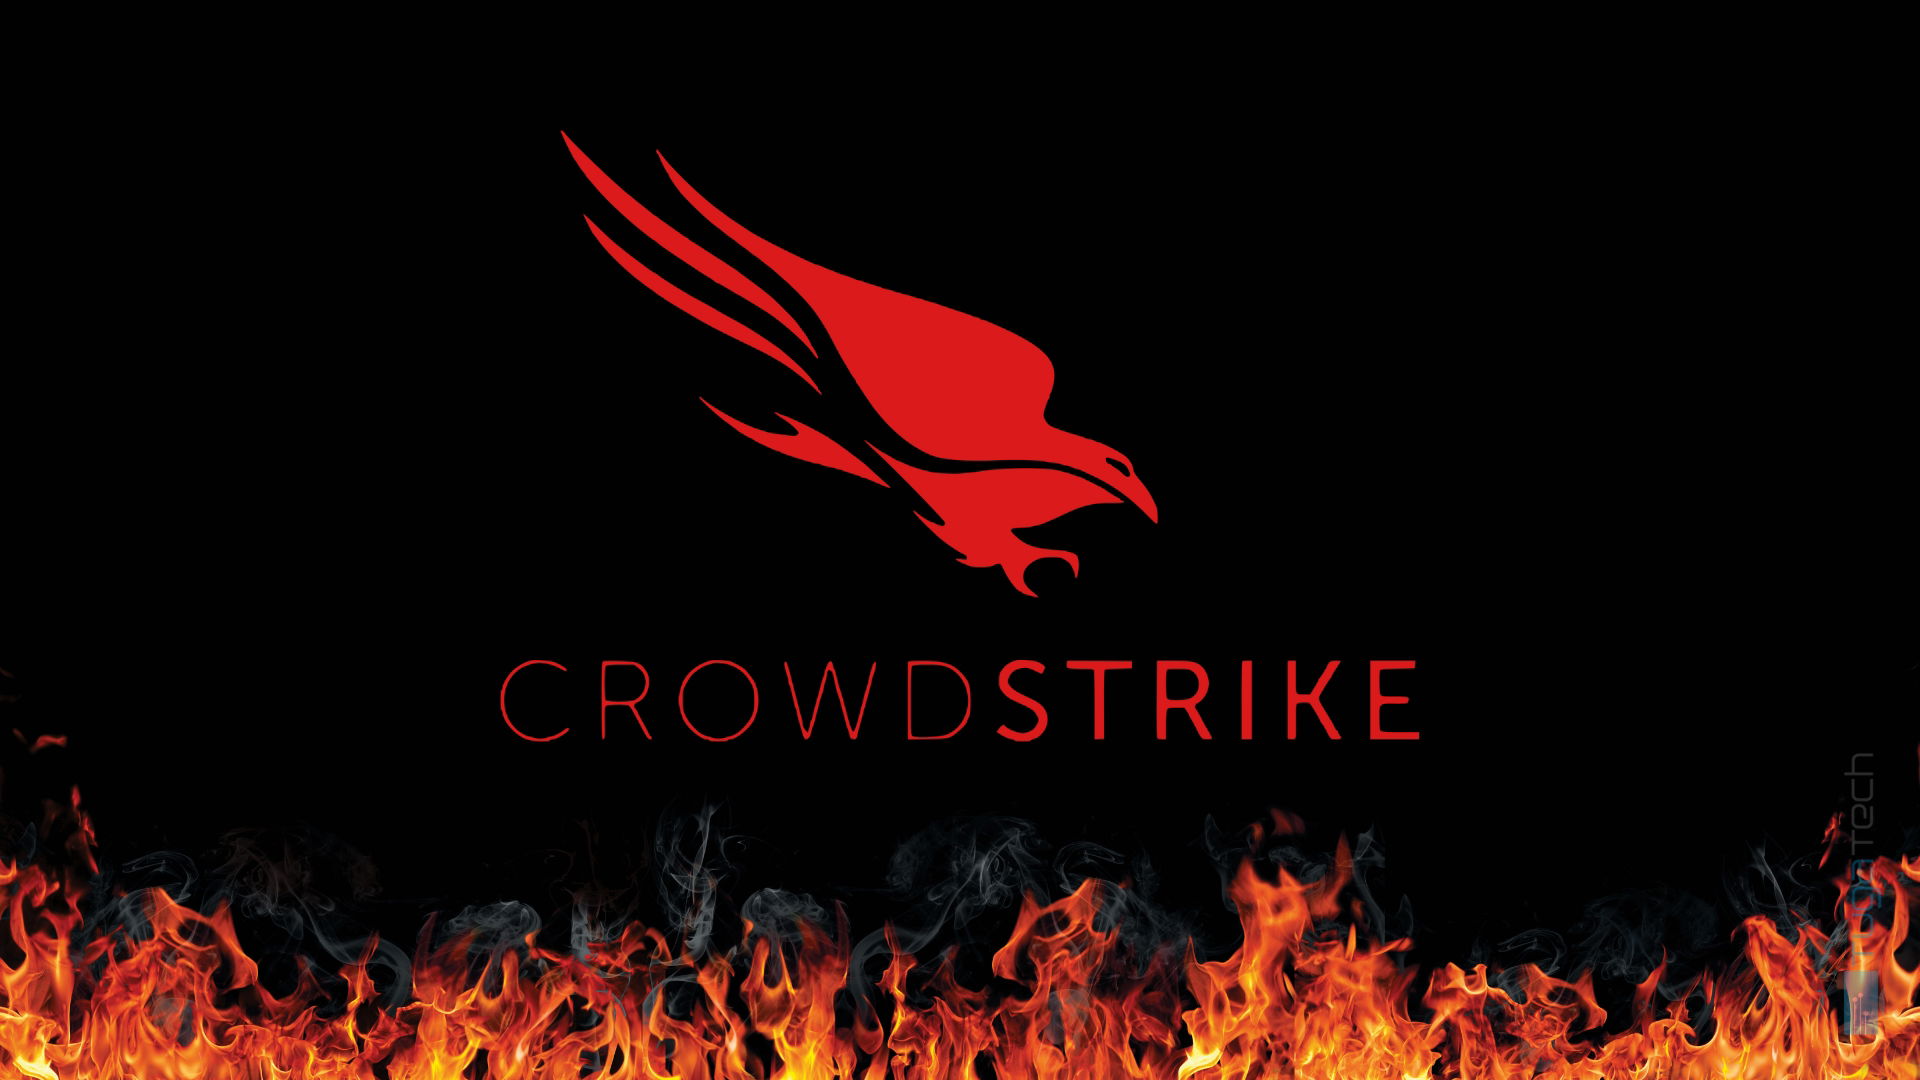 CrowdStrike sobre fogo